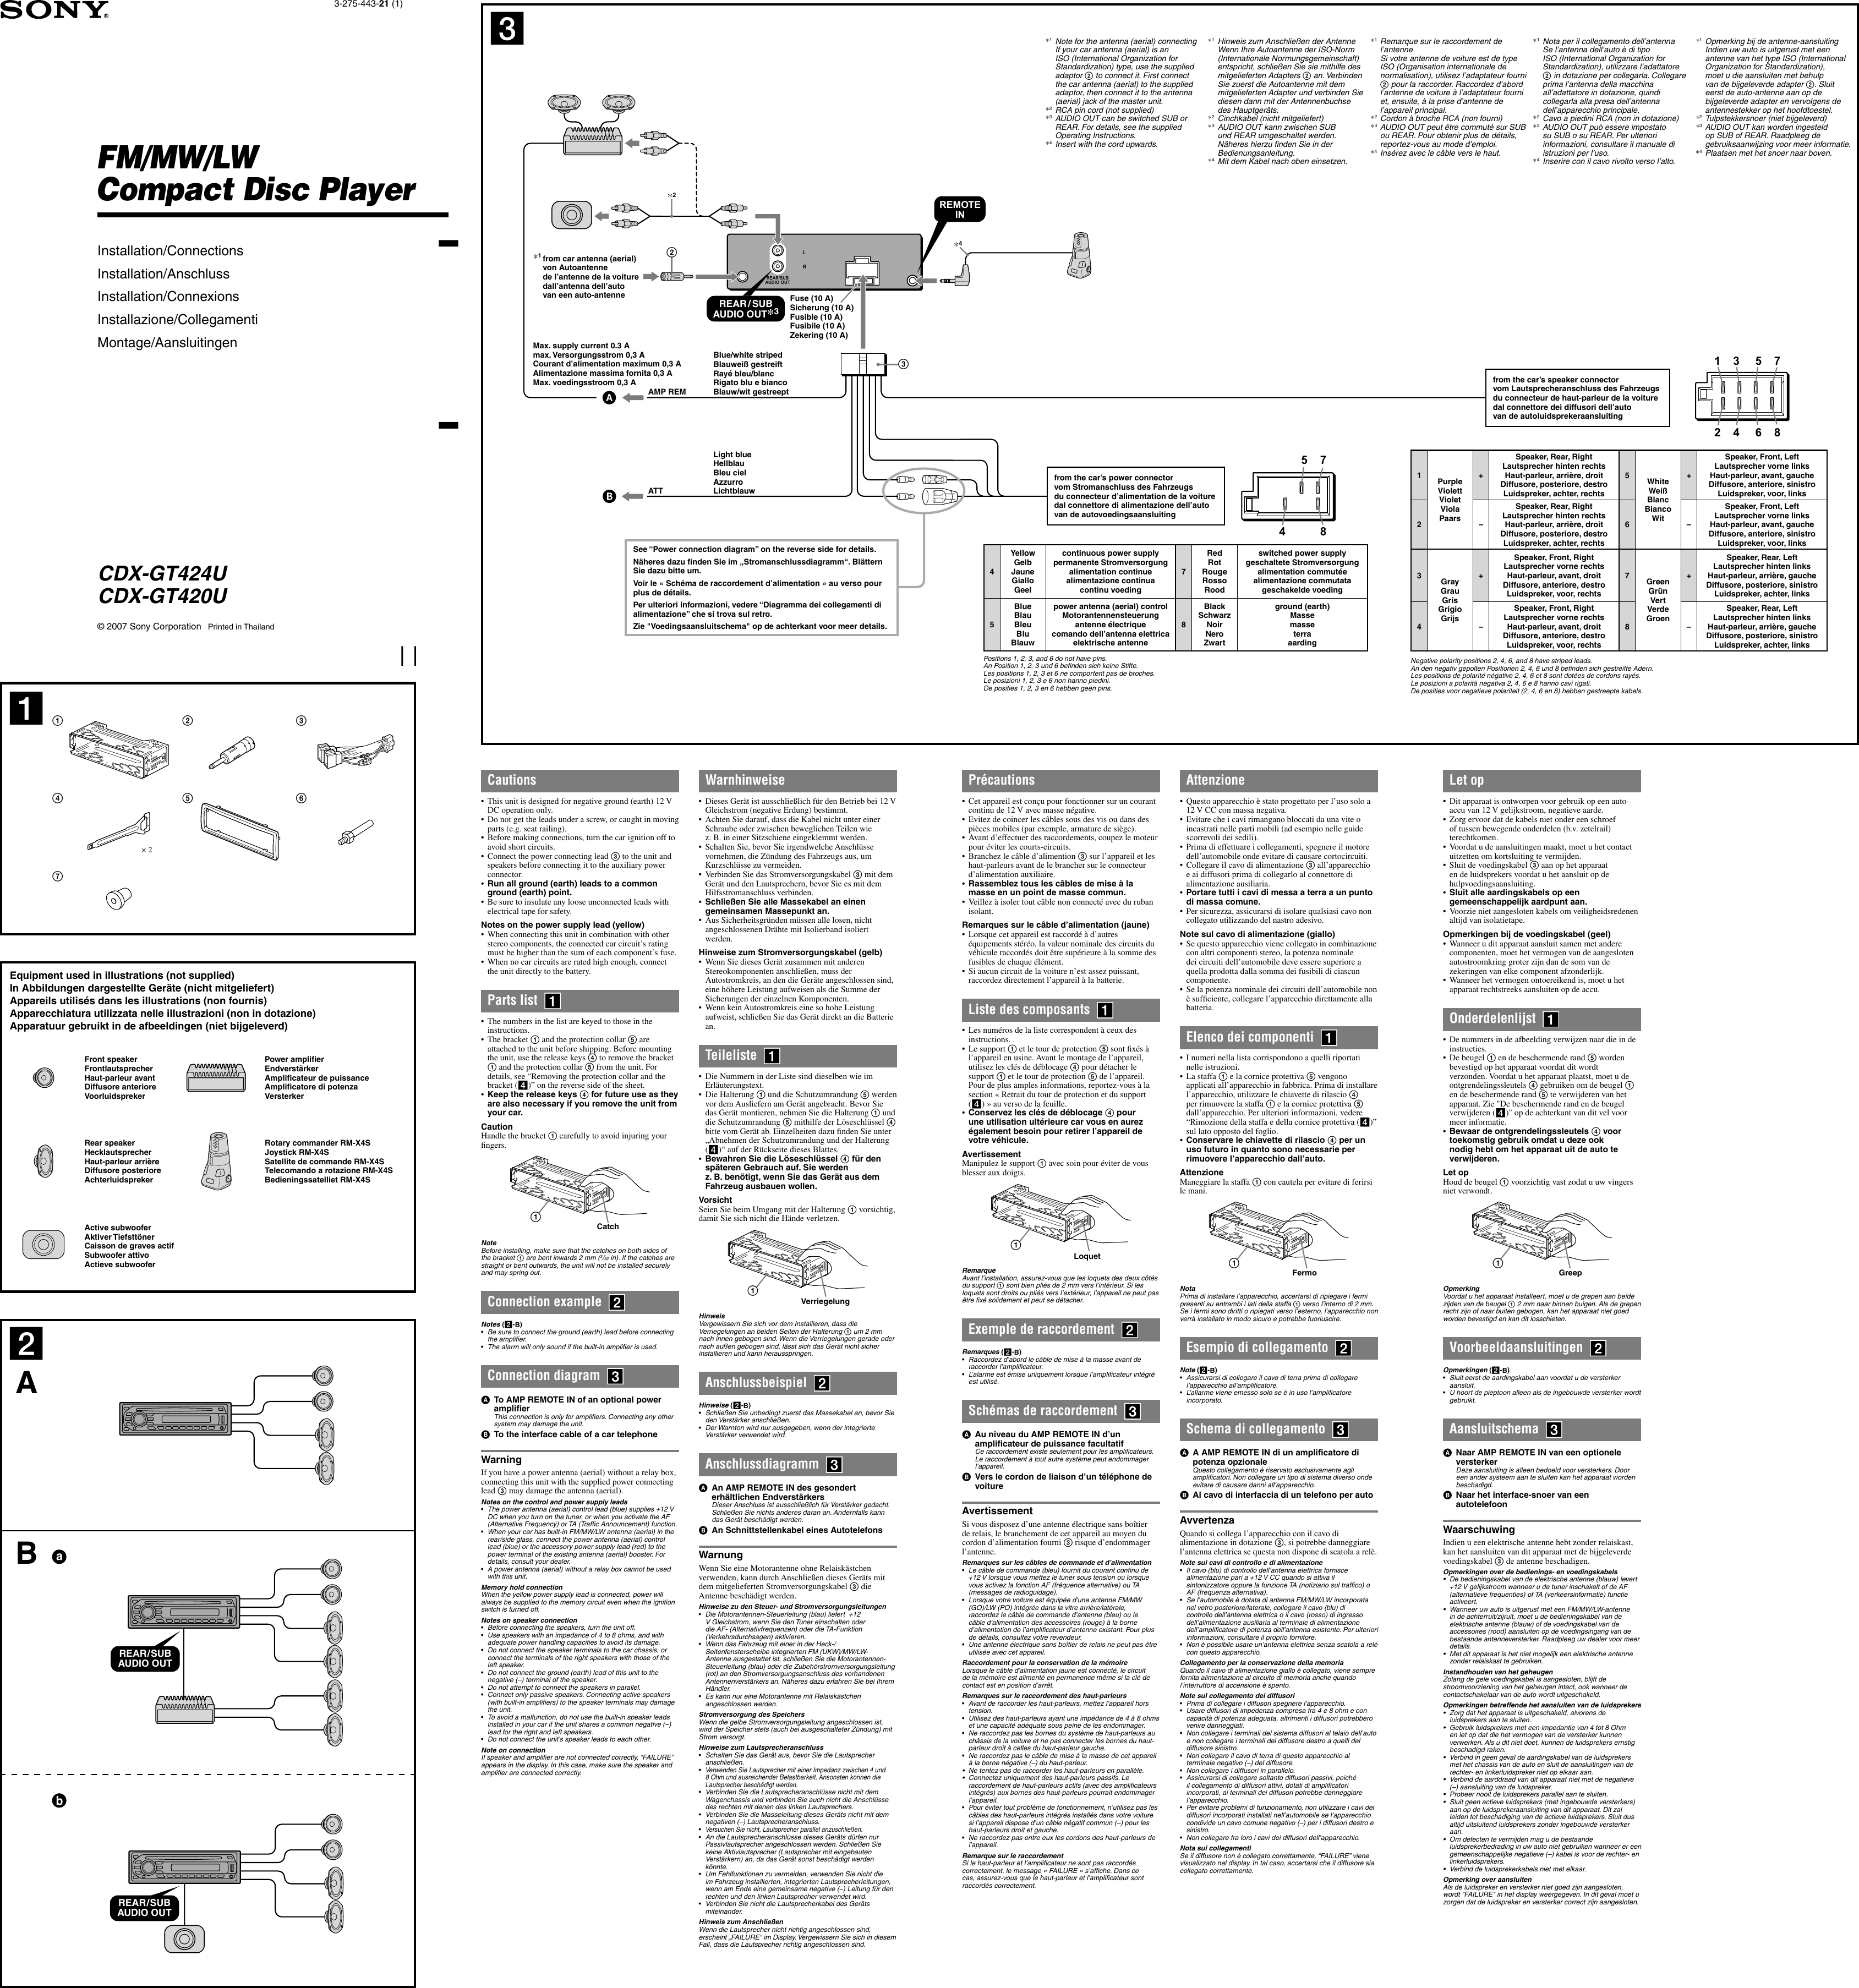 Page 1 of 2 - Sony Sony-Cdx-Gt420U-Users-Manual- CDX-GT424U/GT420U  Sony-cdx-gt420u-users-manual